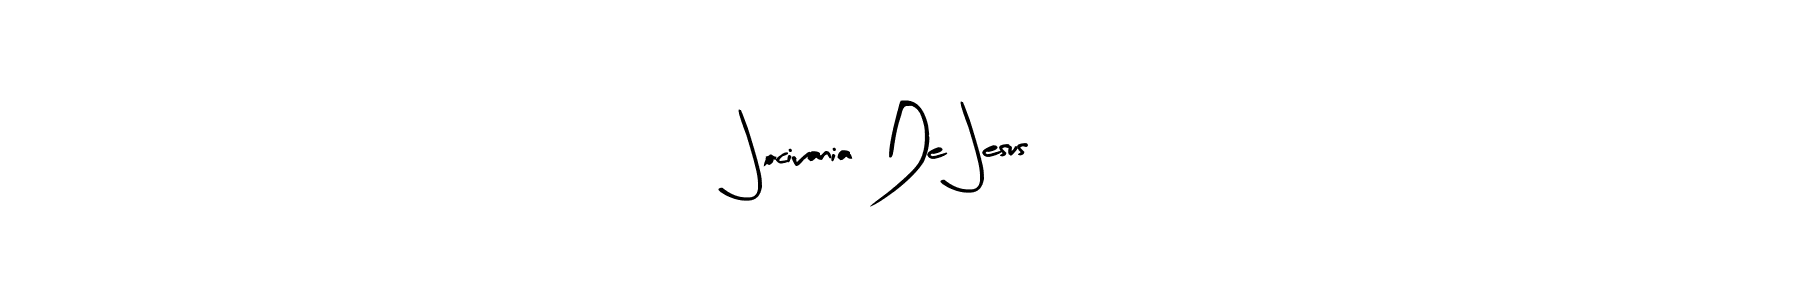 Make a beautiful signature design for name Jocivania De Jesus. Use this online signature maker to create a handwritten signature for free. Jocivania De Jesus signature style 8 images and pictures png